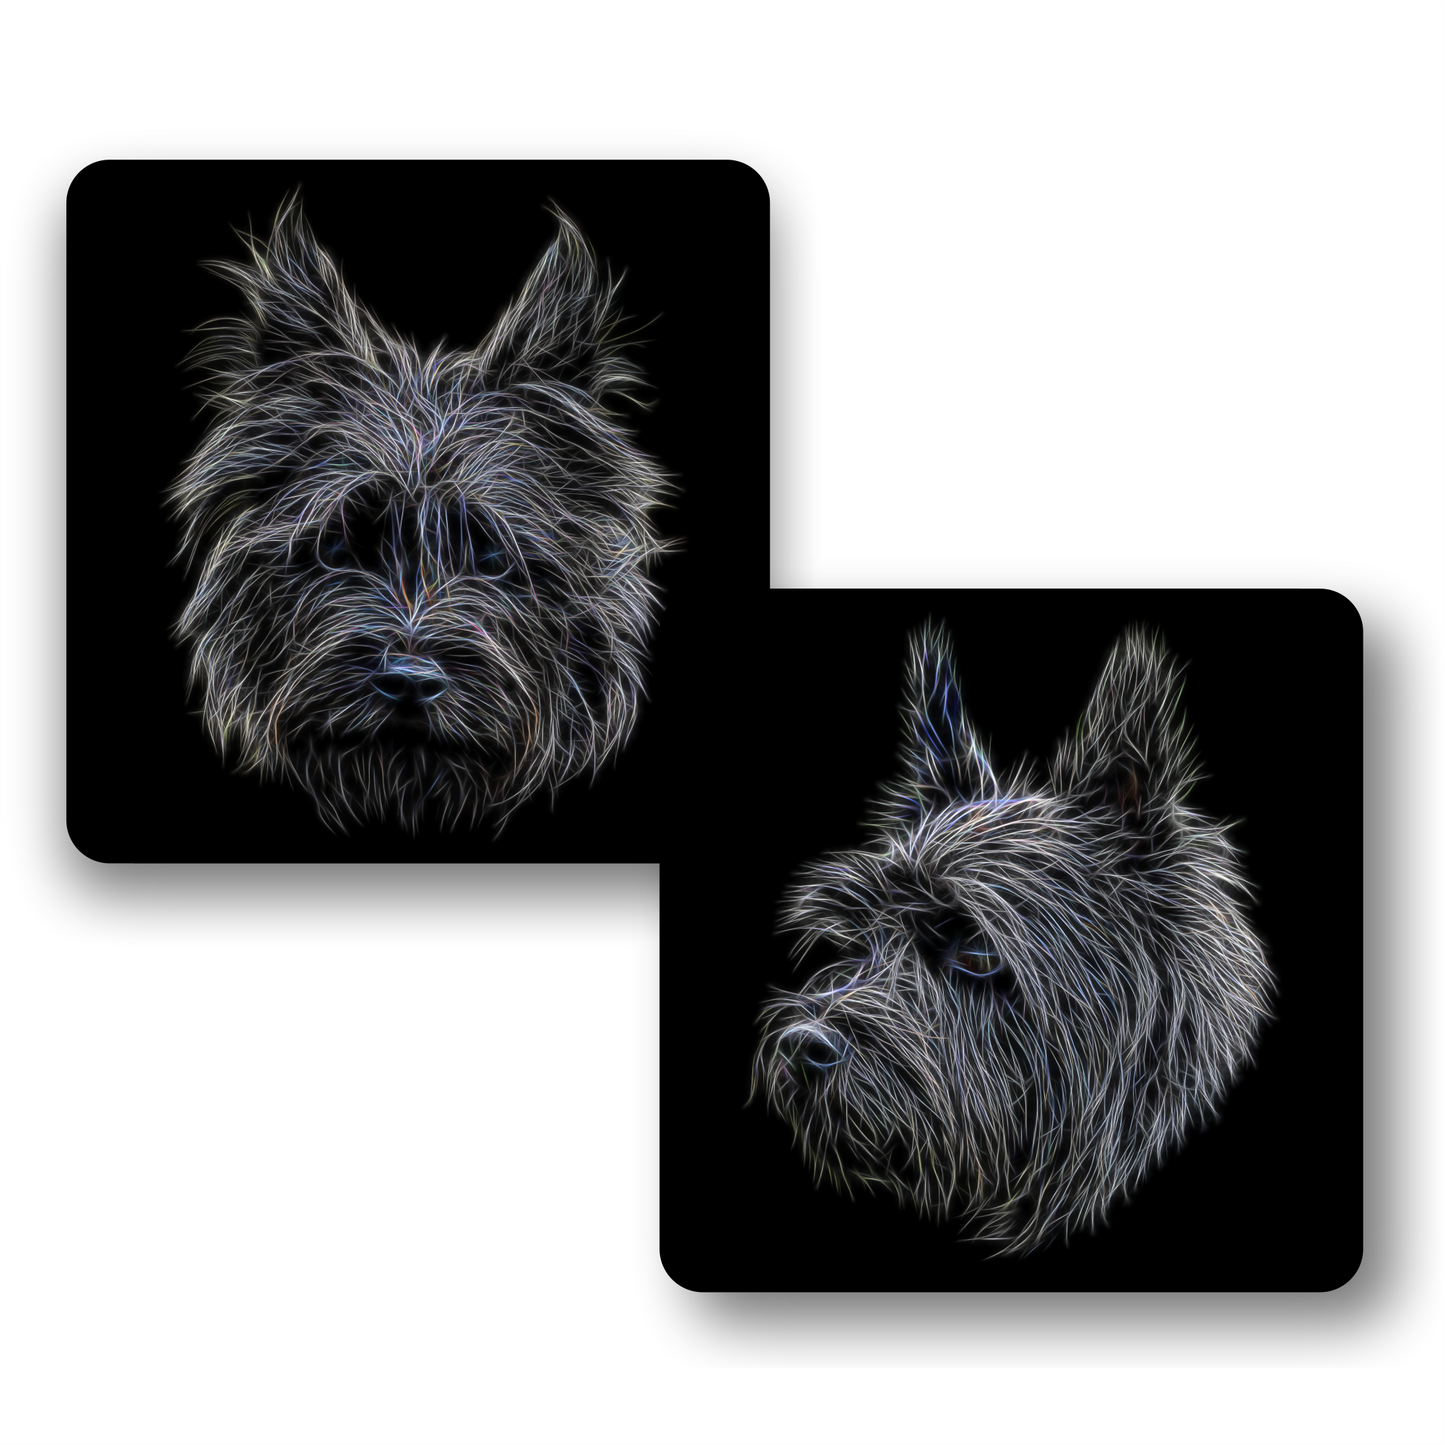 Black Cairn Terrier Coasters, Set of 2, with Stunning Fractal Art Design.